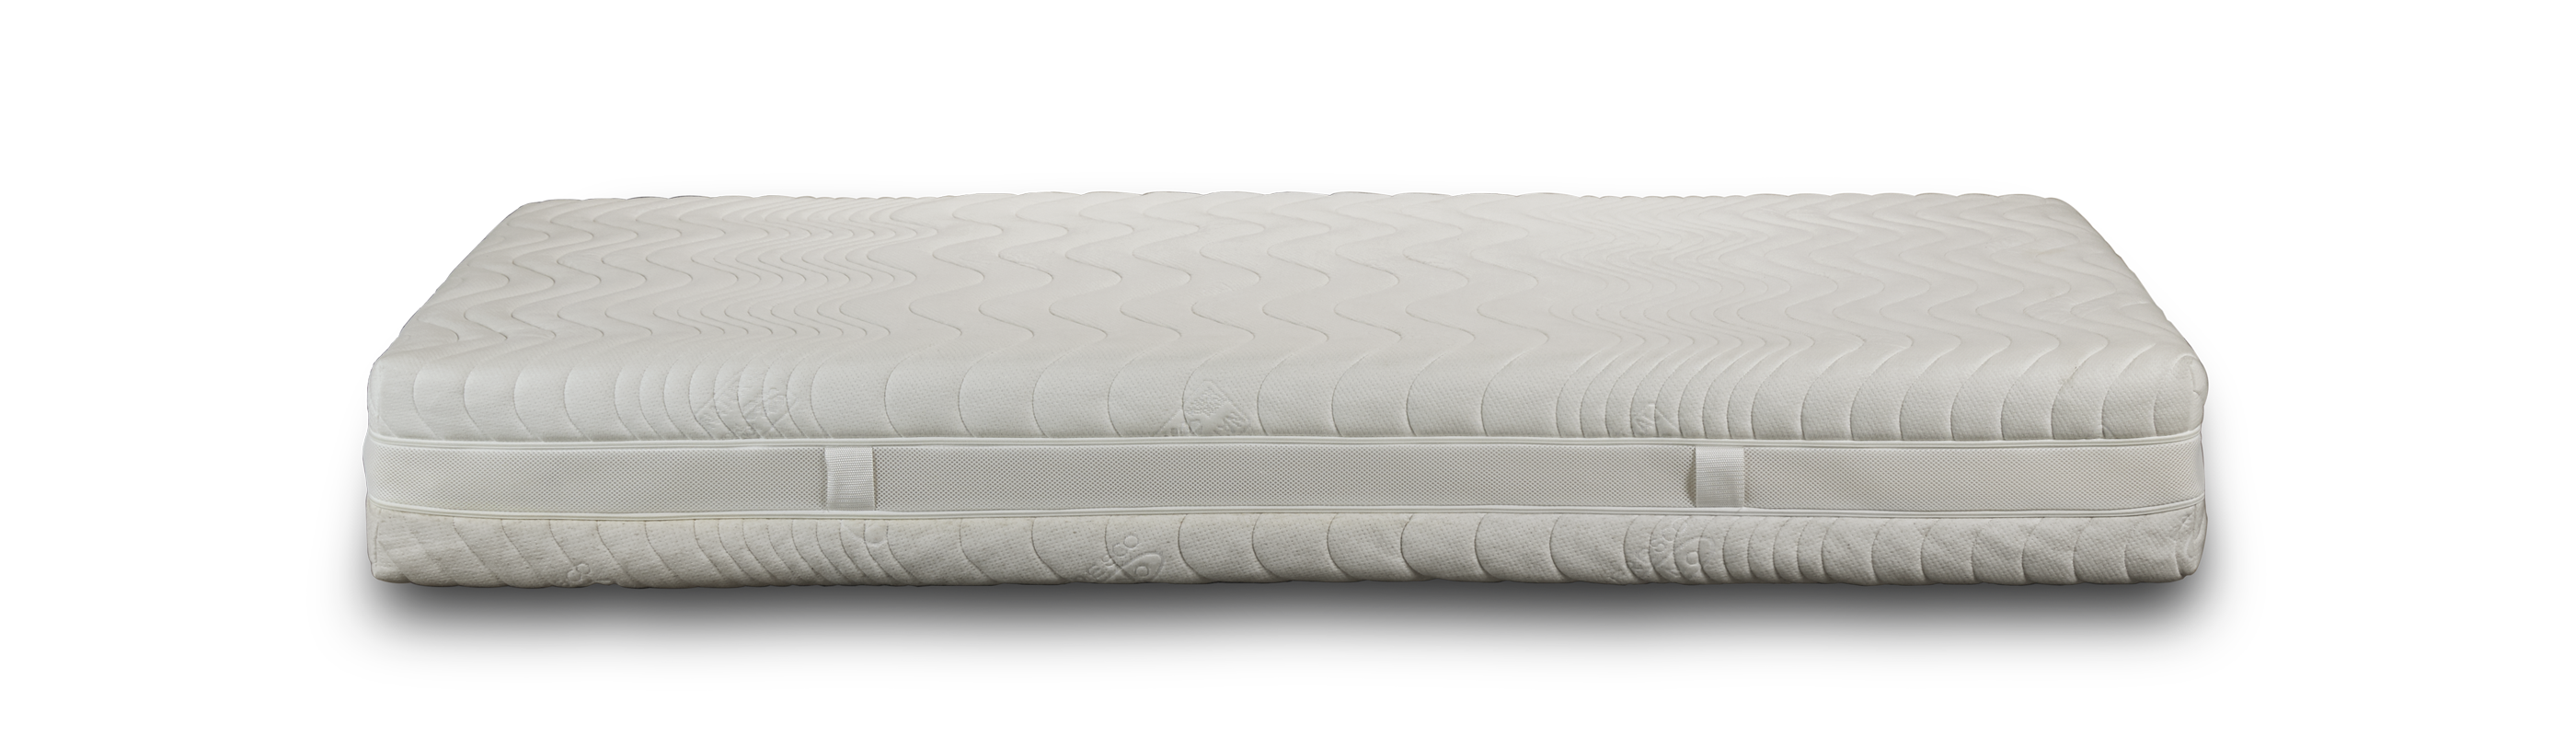 Latex and soft viscoelastic mattress | Sogno